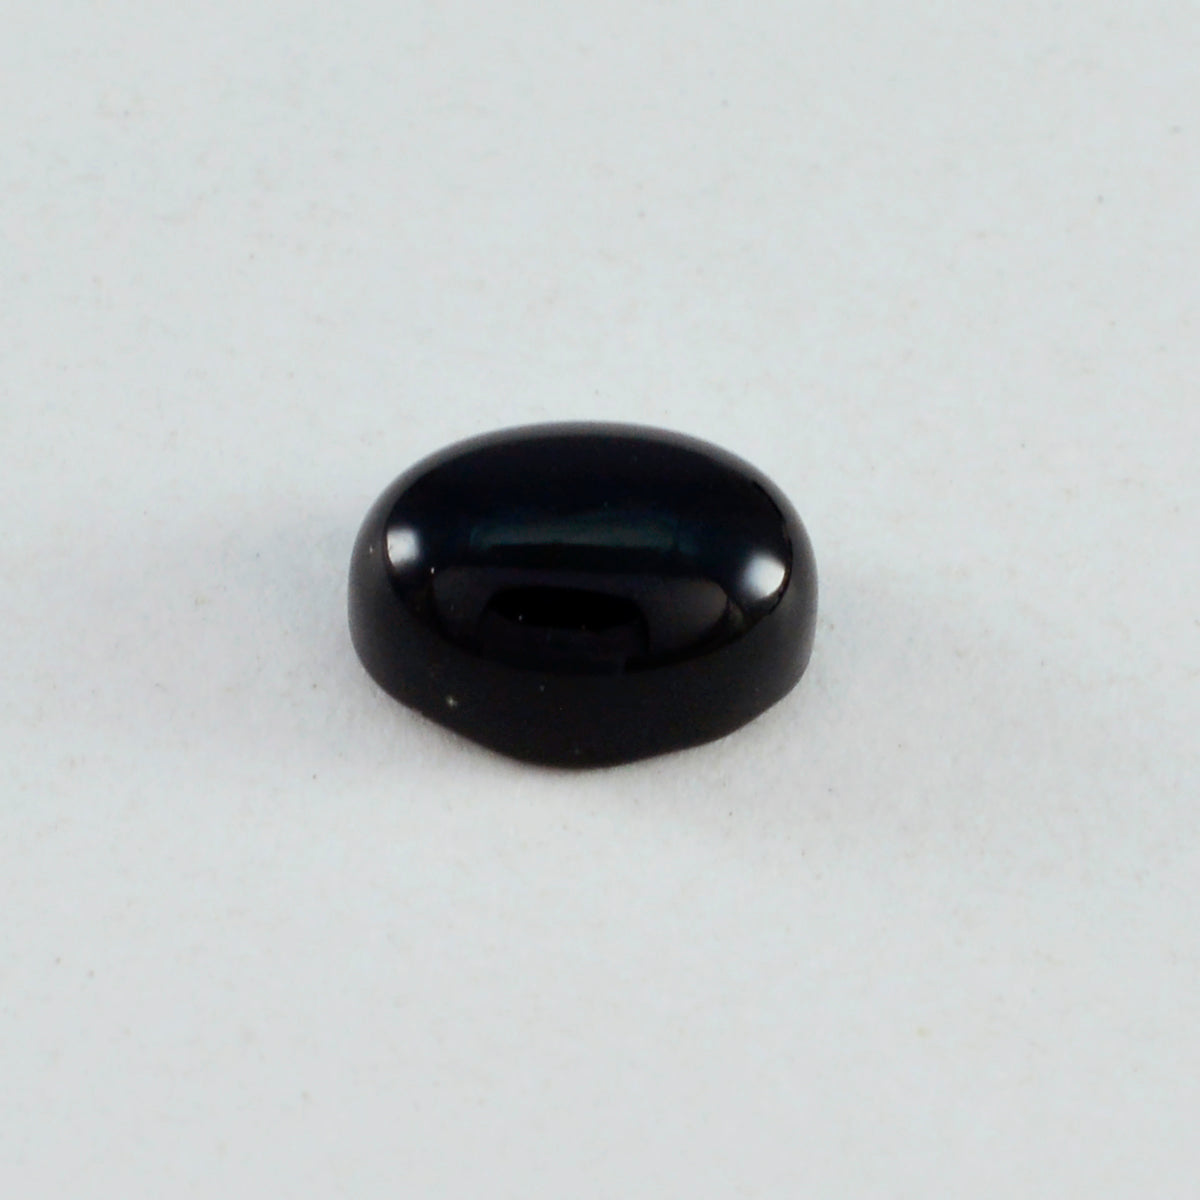 Riyogems 1PC Black Onyx Cabochon 8x10 mm Oval Shape lovely Quality Loose Stone